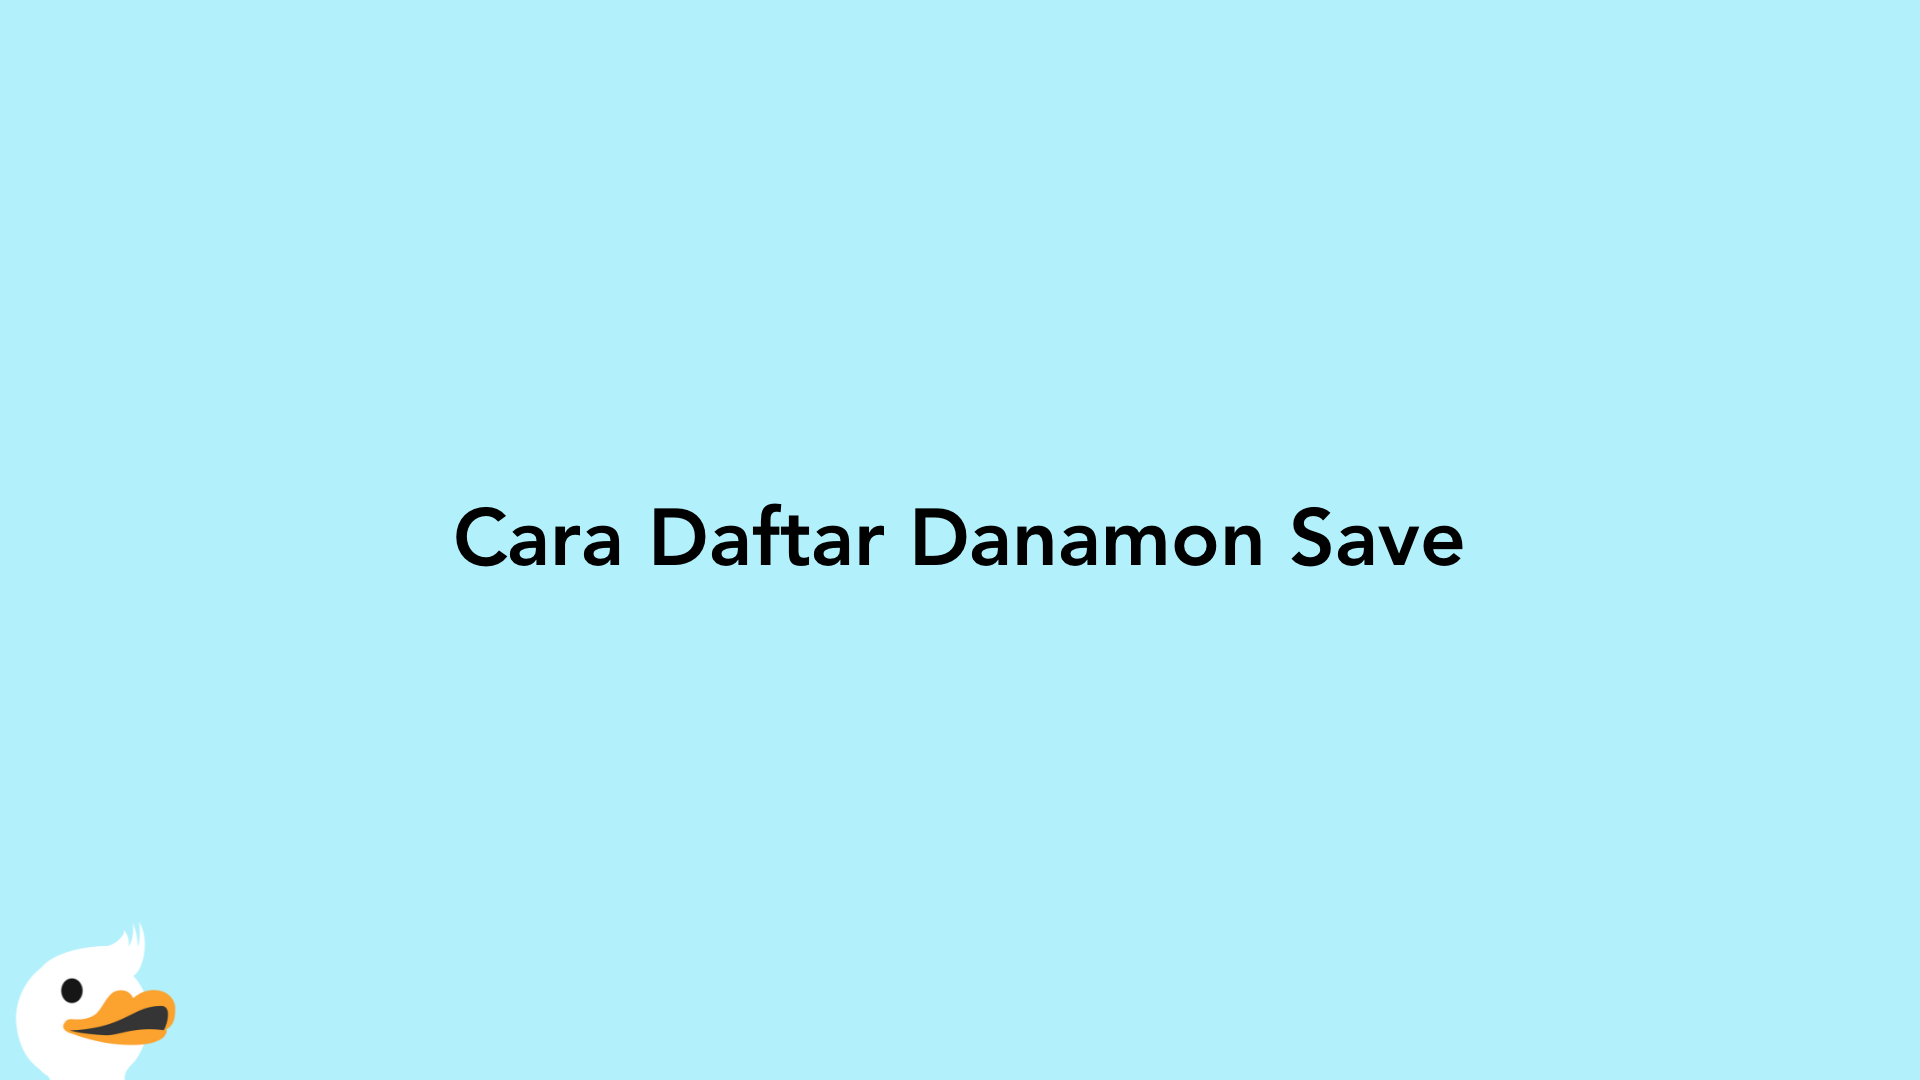 Cara Daftar Danamon Save